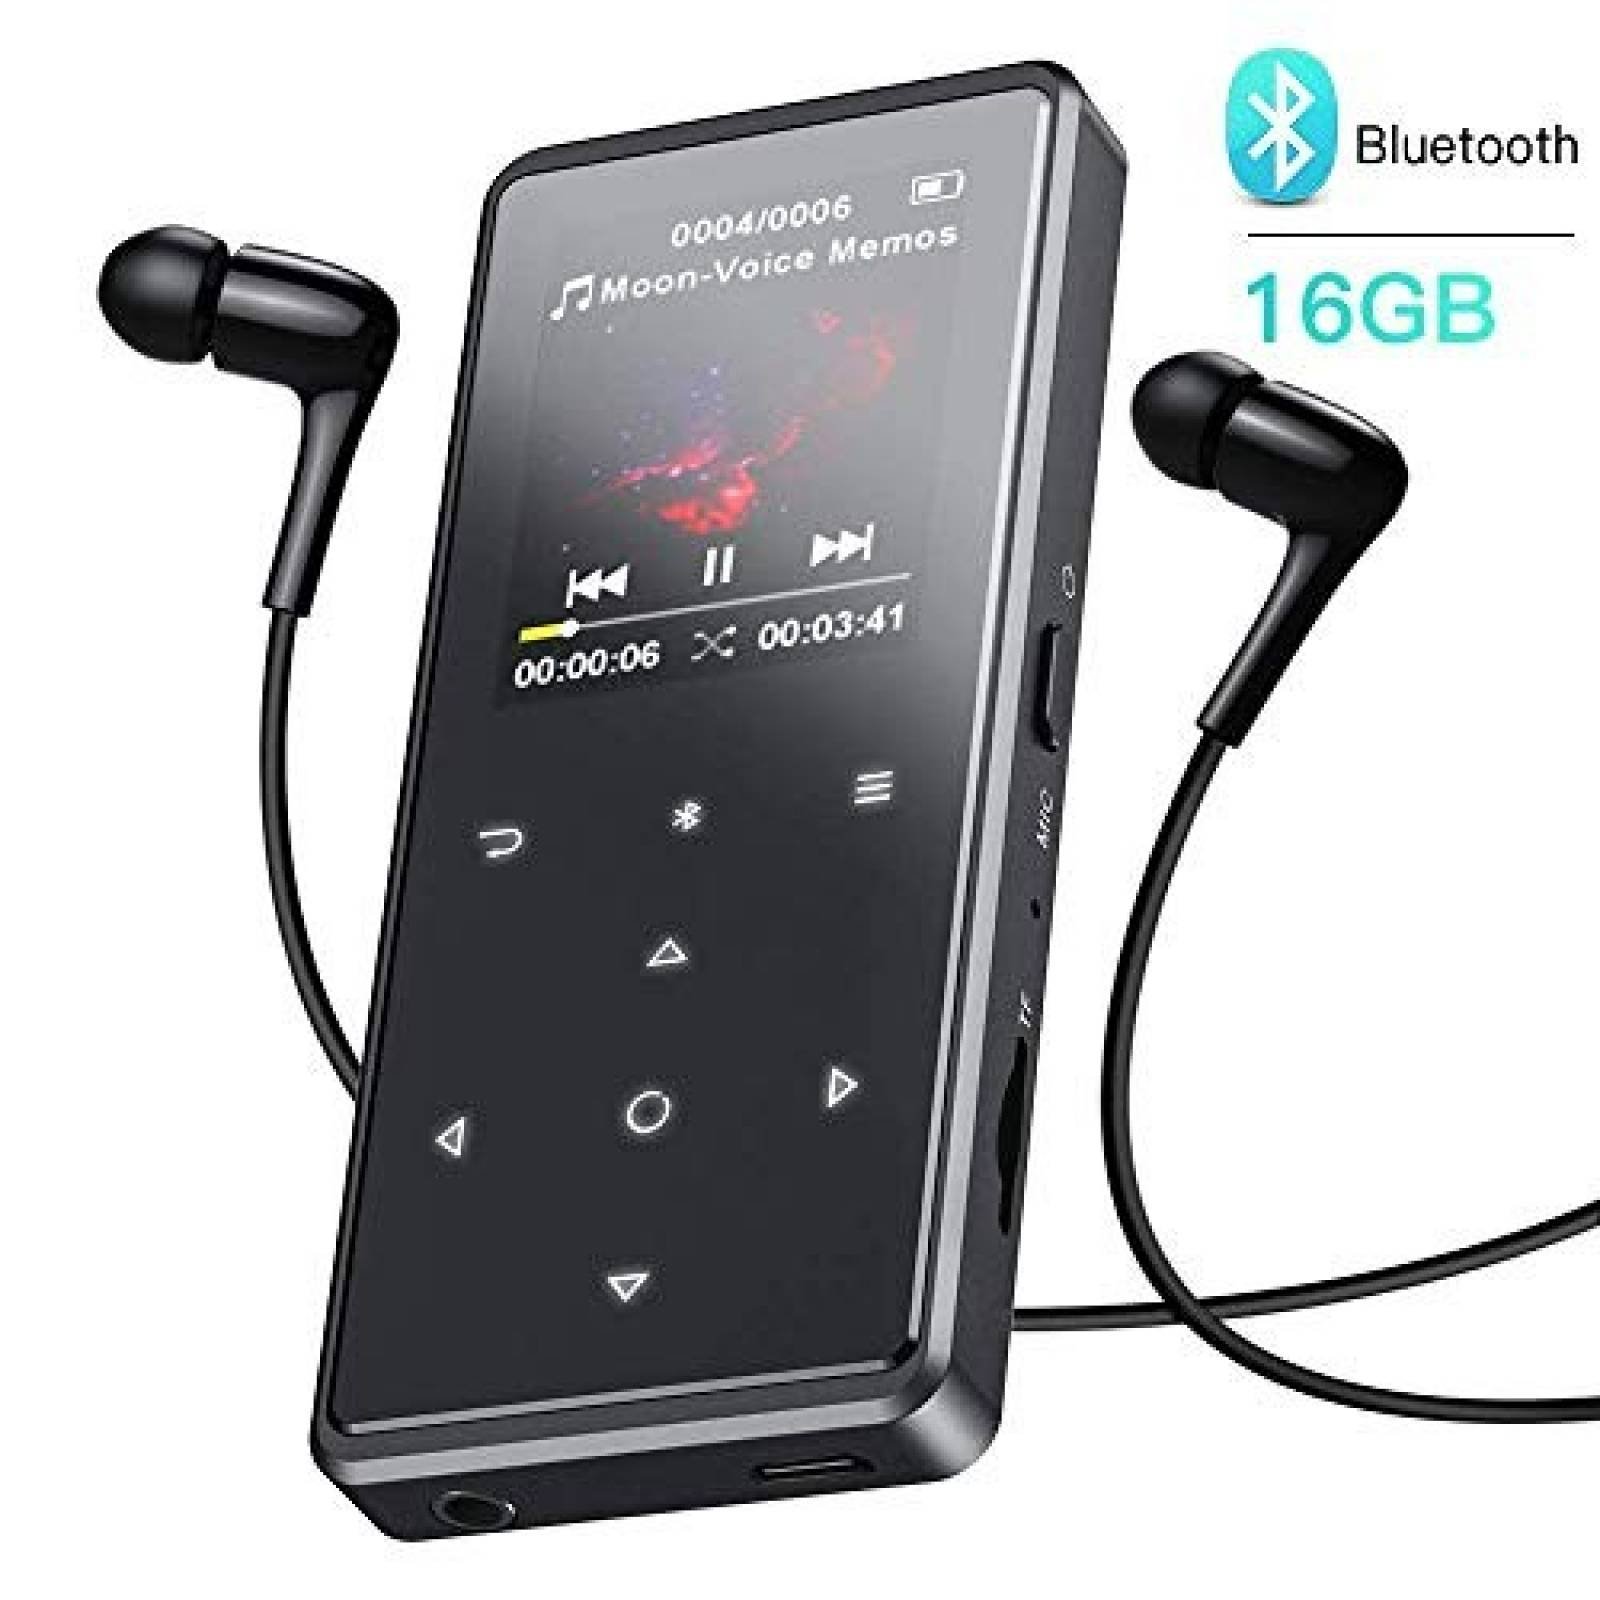 Reproductor MP3 AGPTEK 16GB Bluetooth -Negro